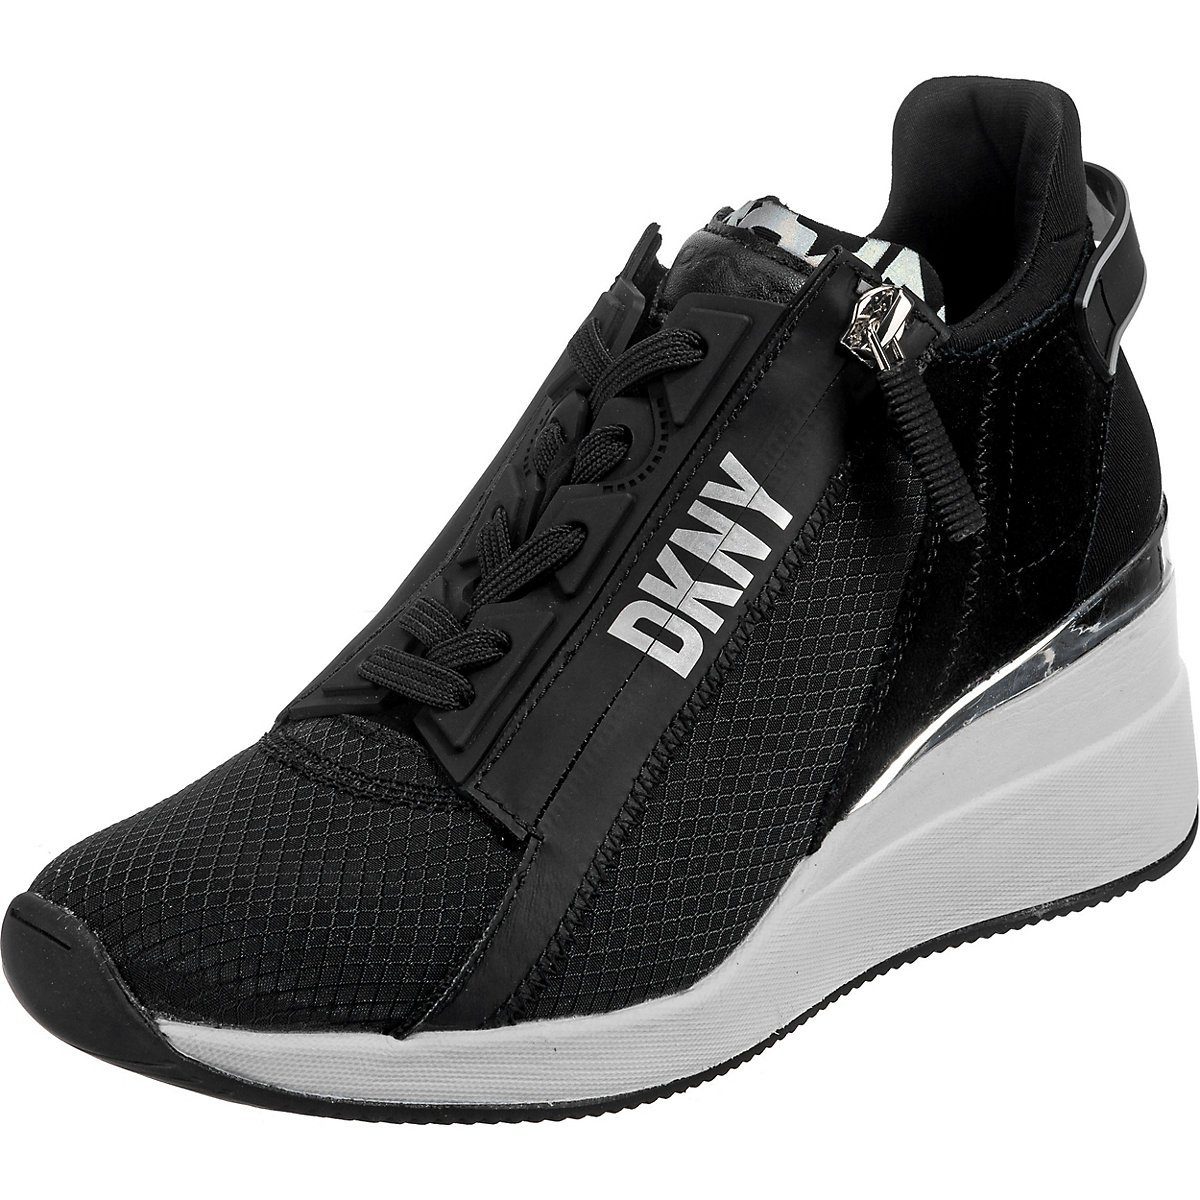 DKNY Damen Sneaker online kaufen | OTTO